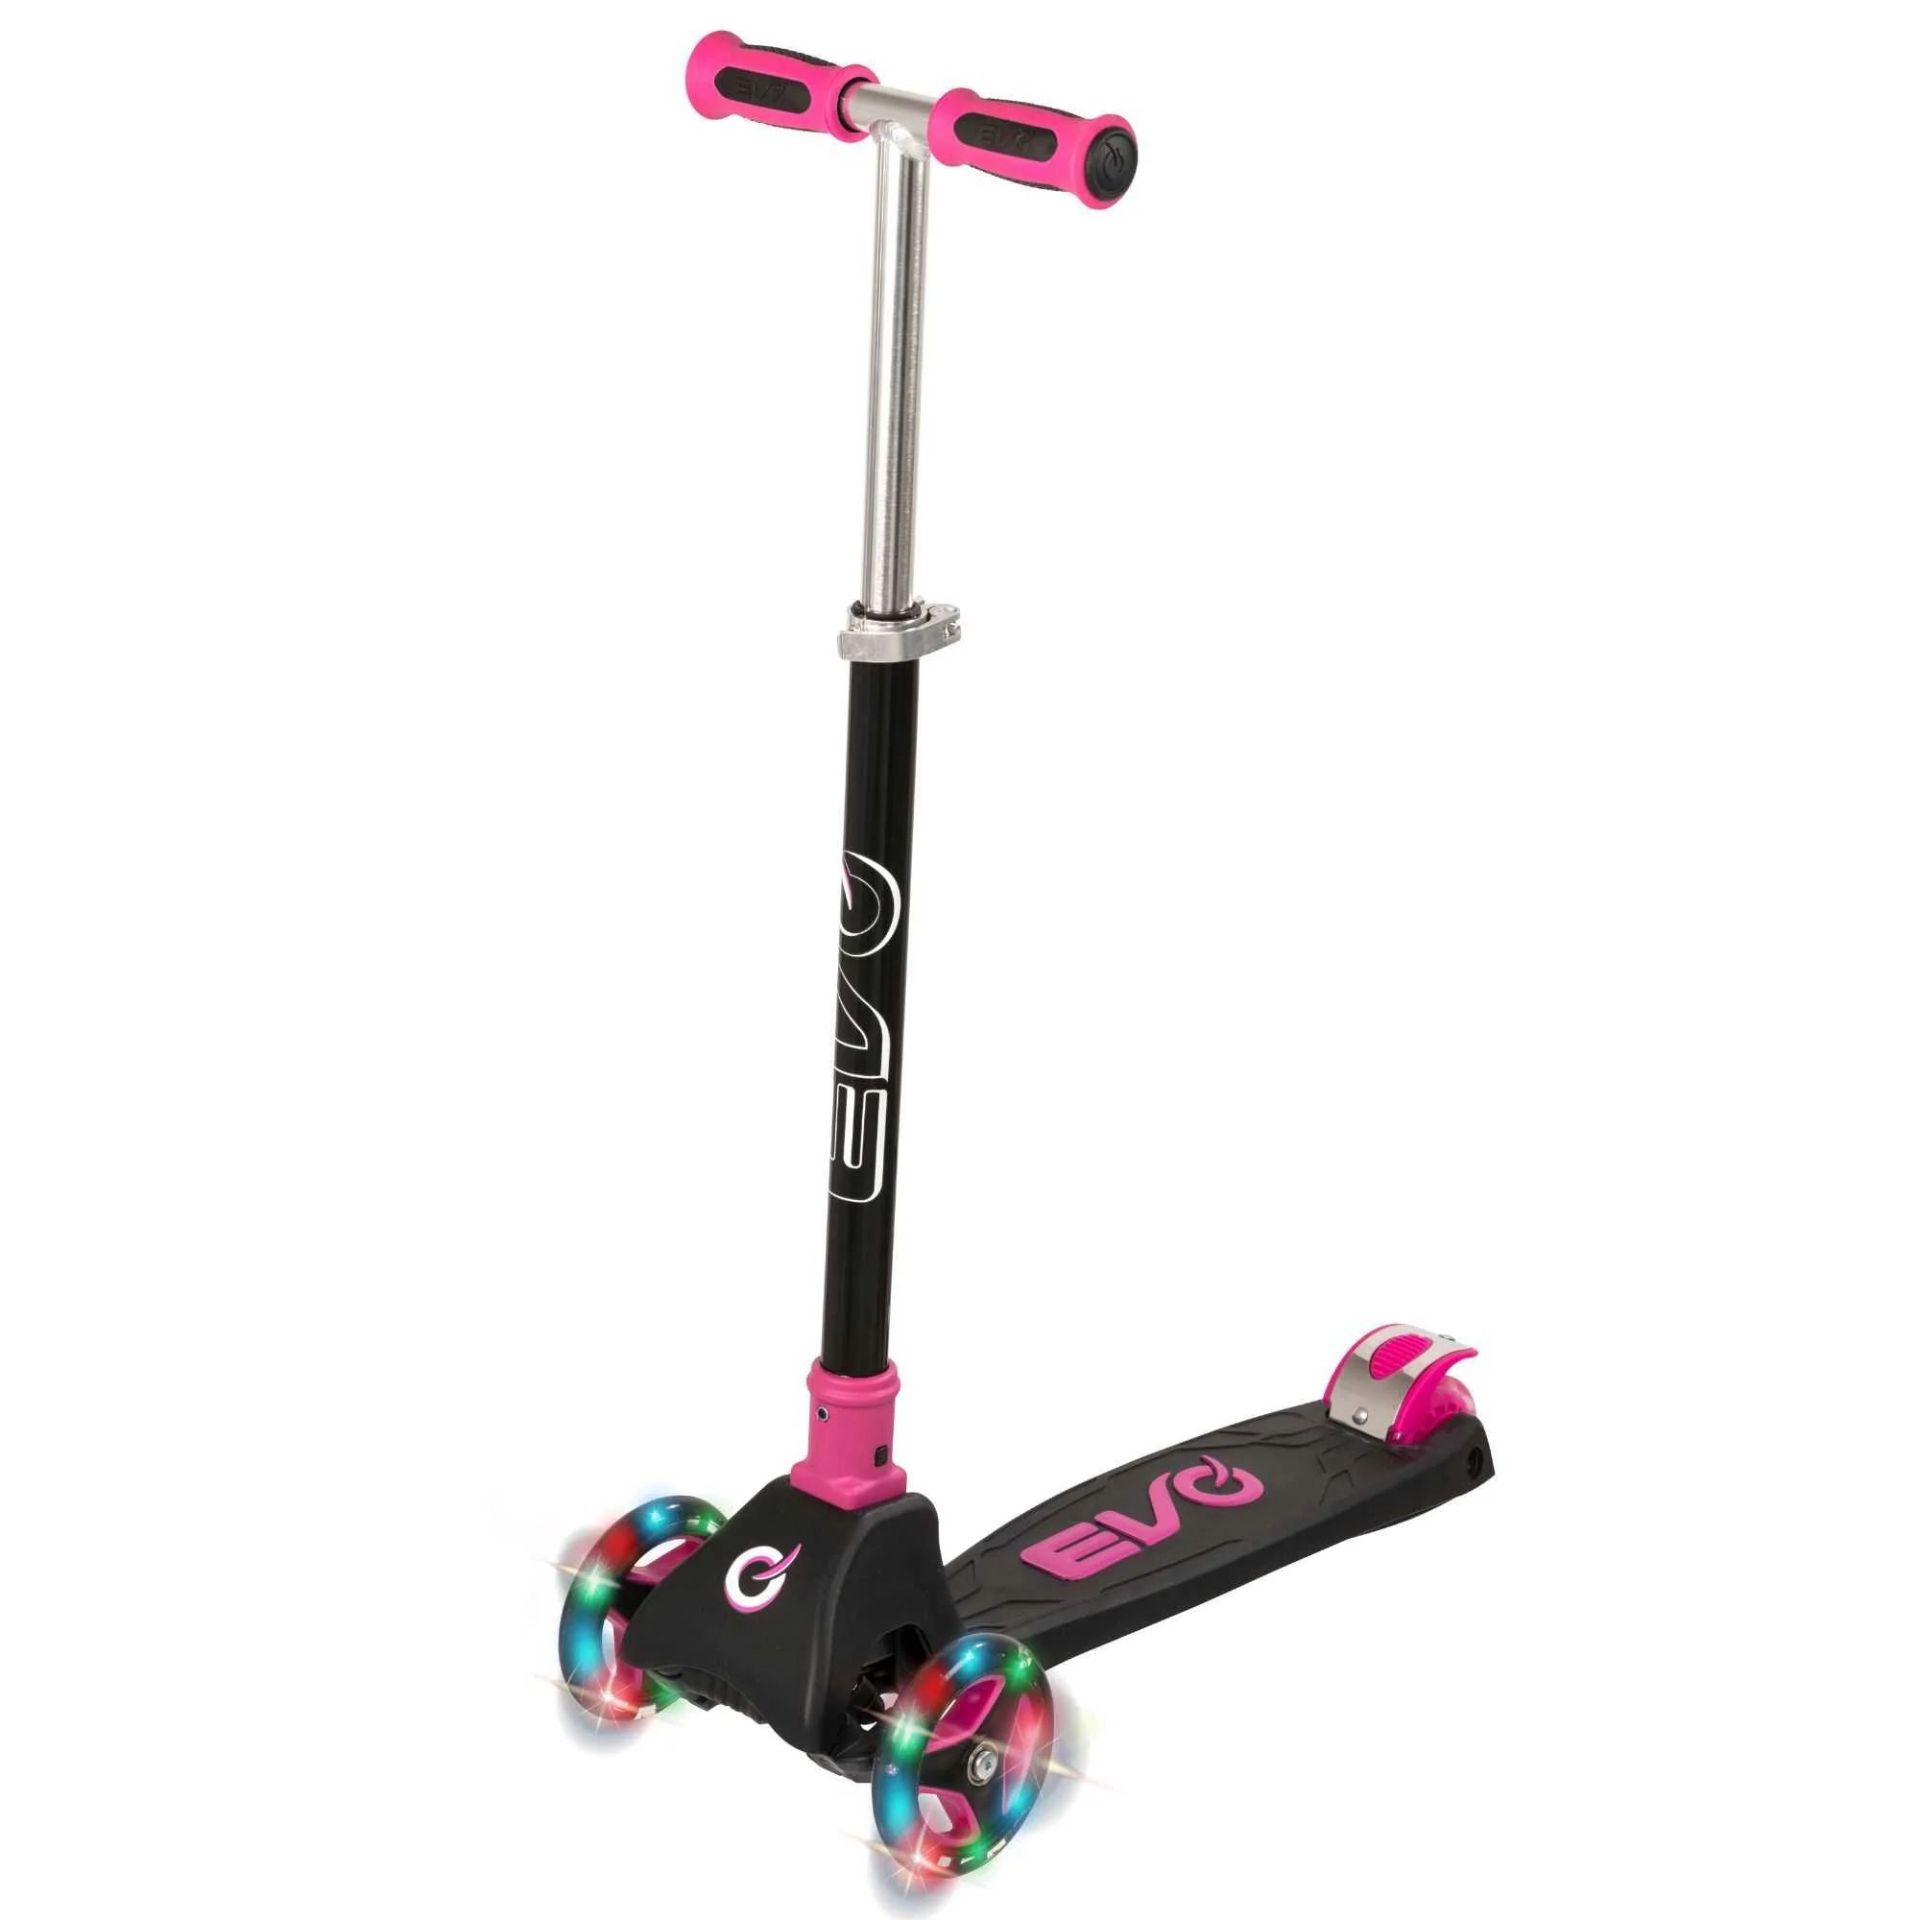 EVO Light Up Cruiser Scooter | Pink. - ER22. This fun, durable Light up Cruiser Scooter has been